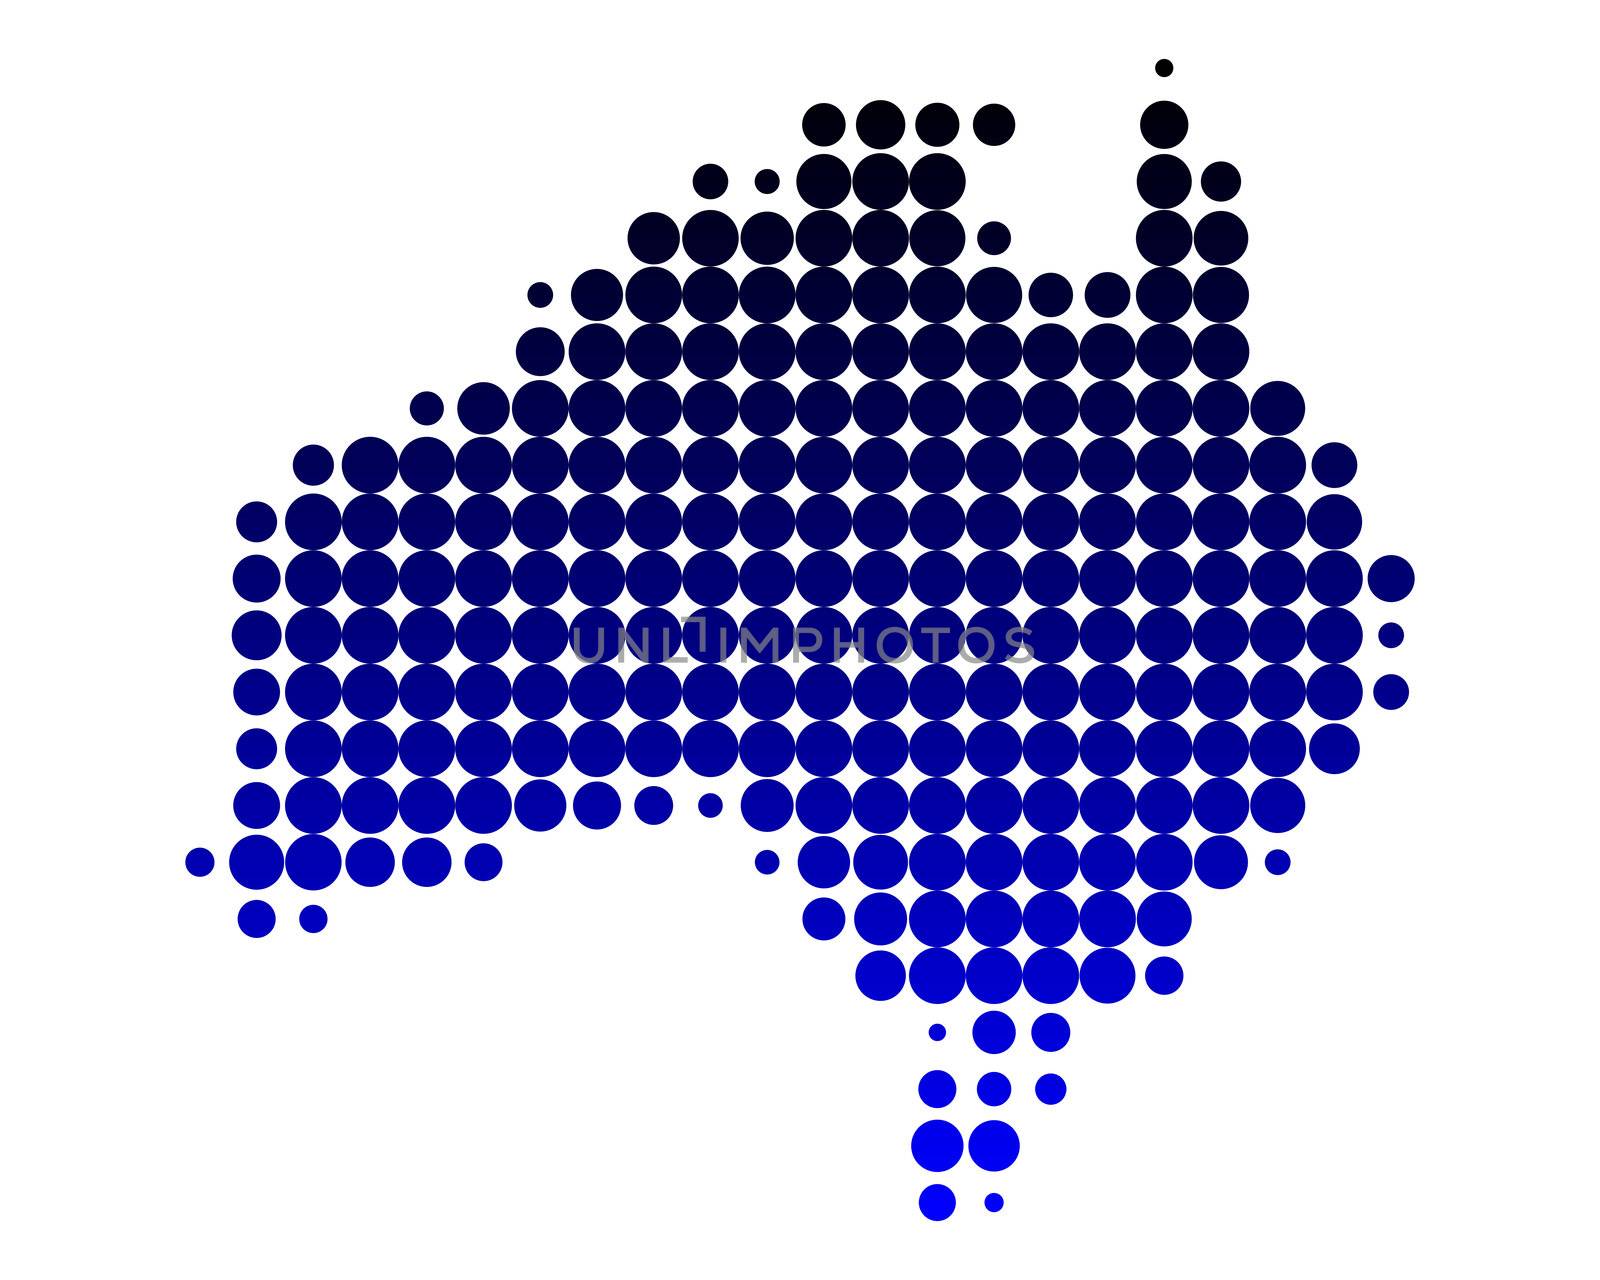 Map of Australia by rbiedermann